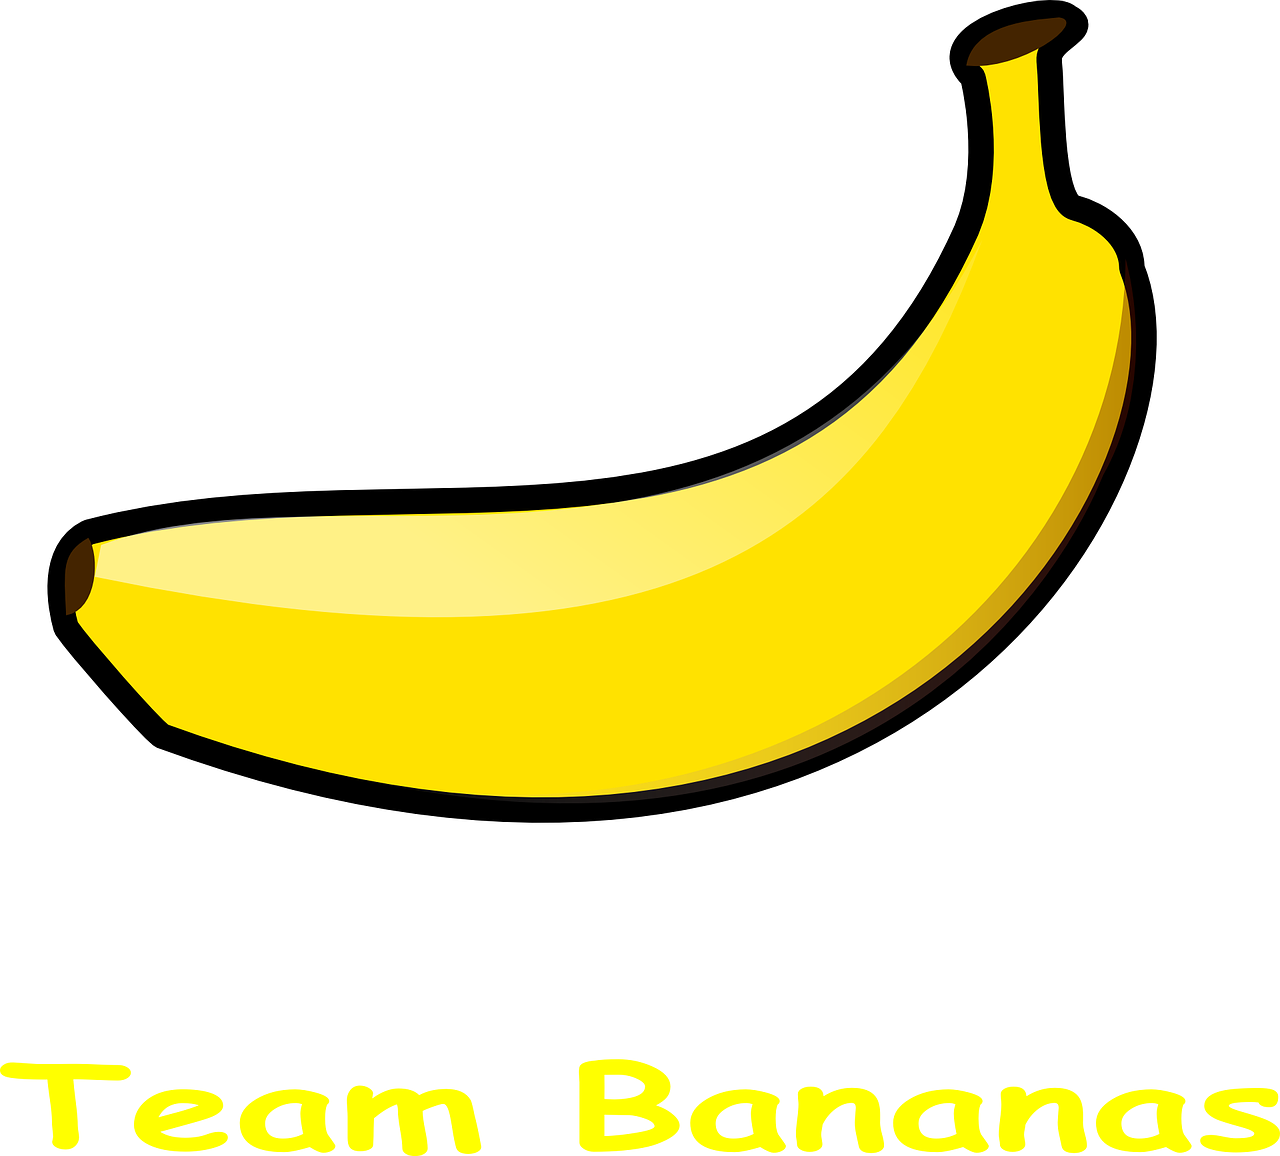 banana team logo fruit free photo